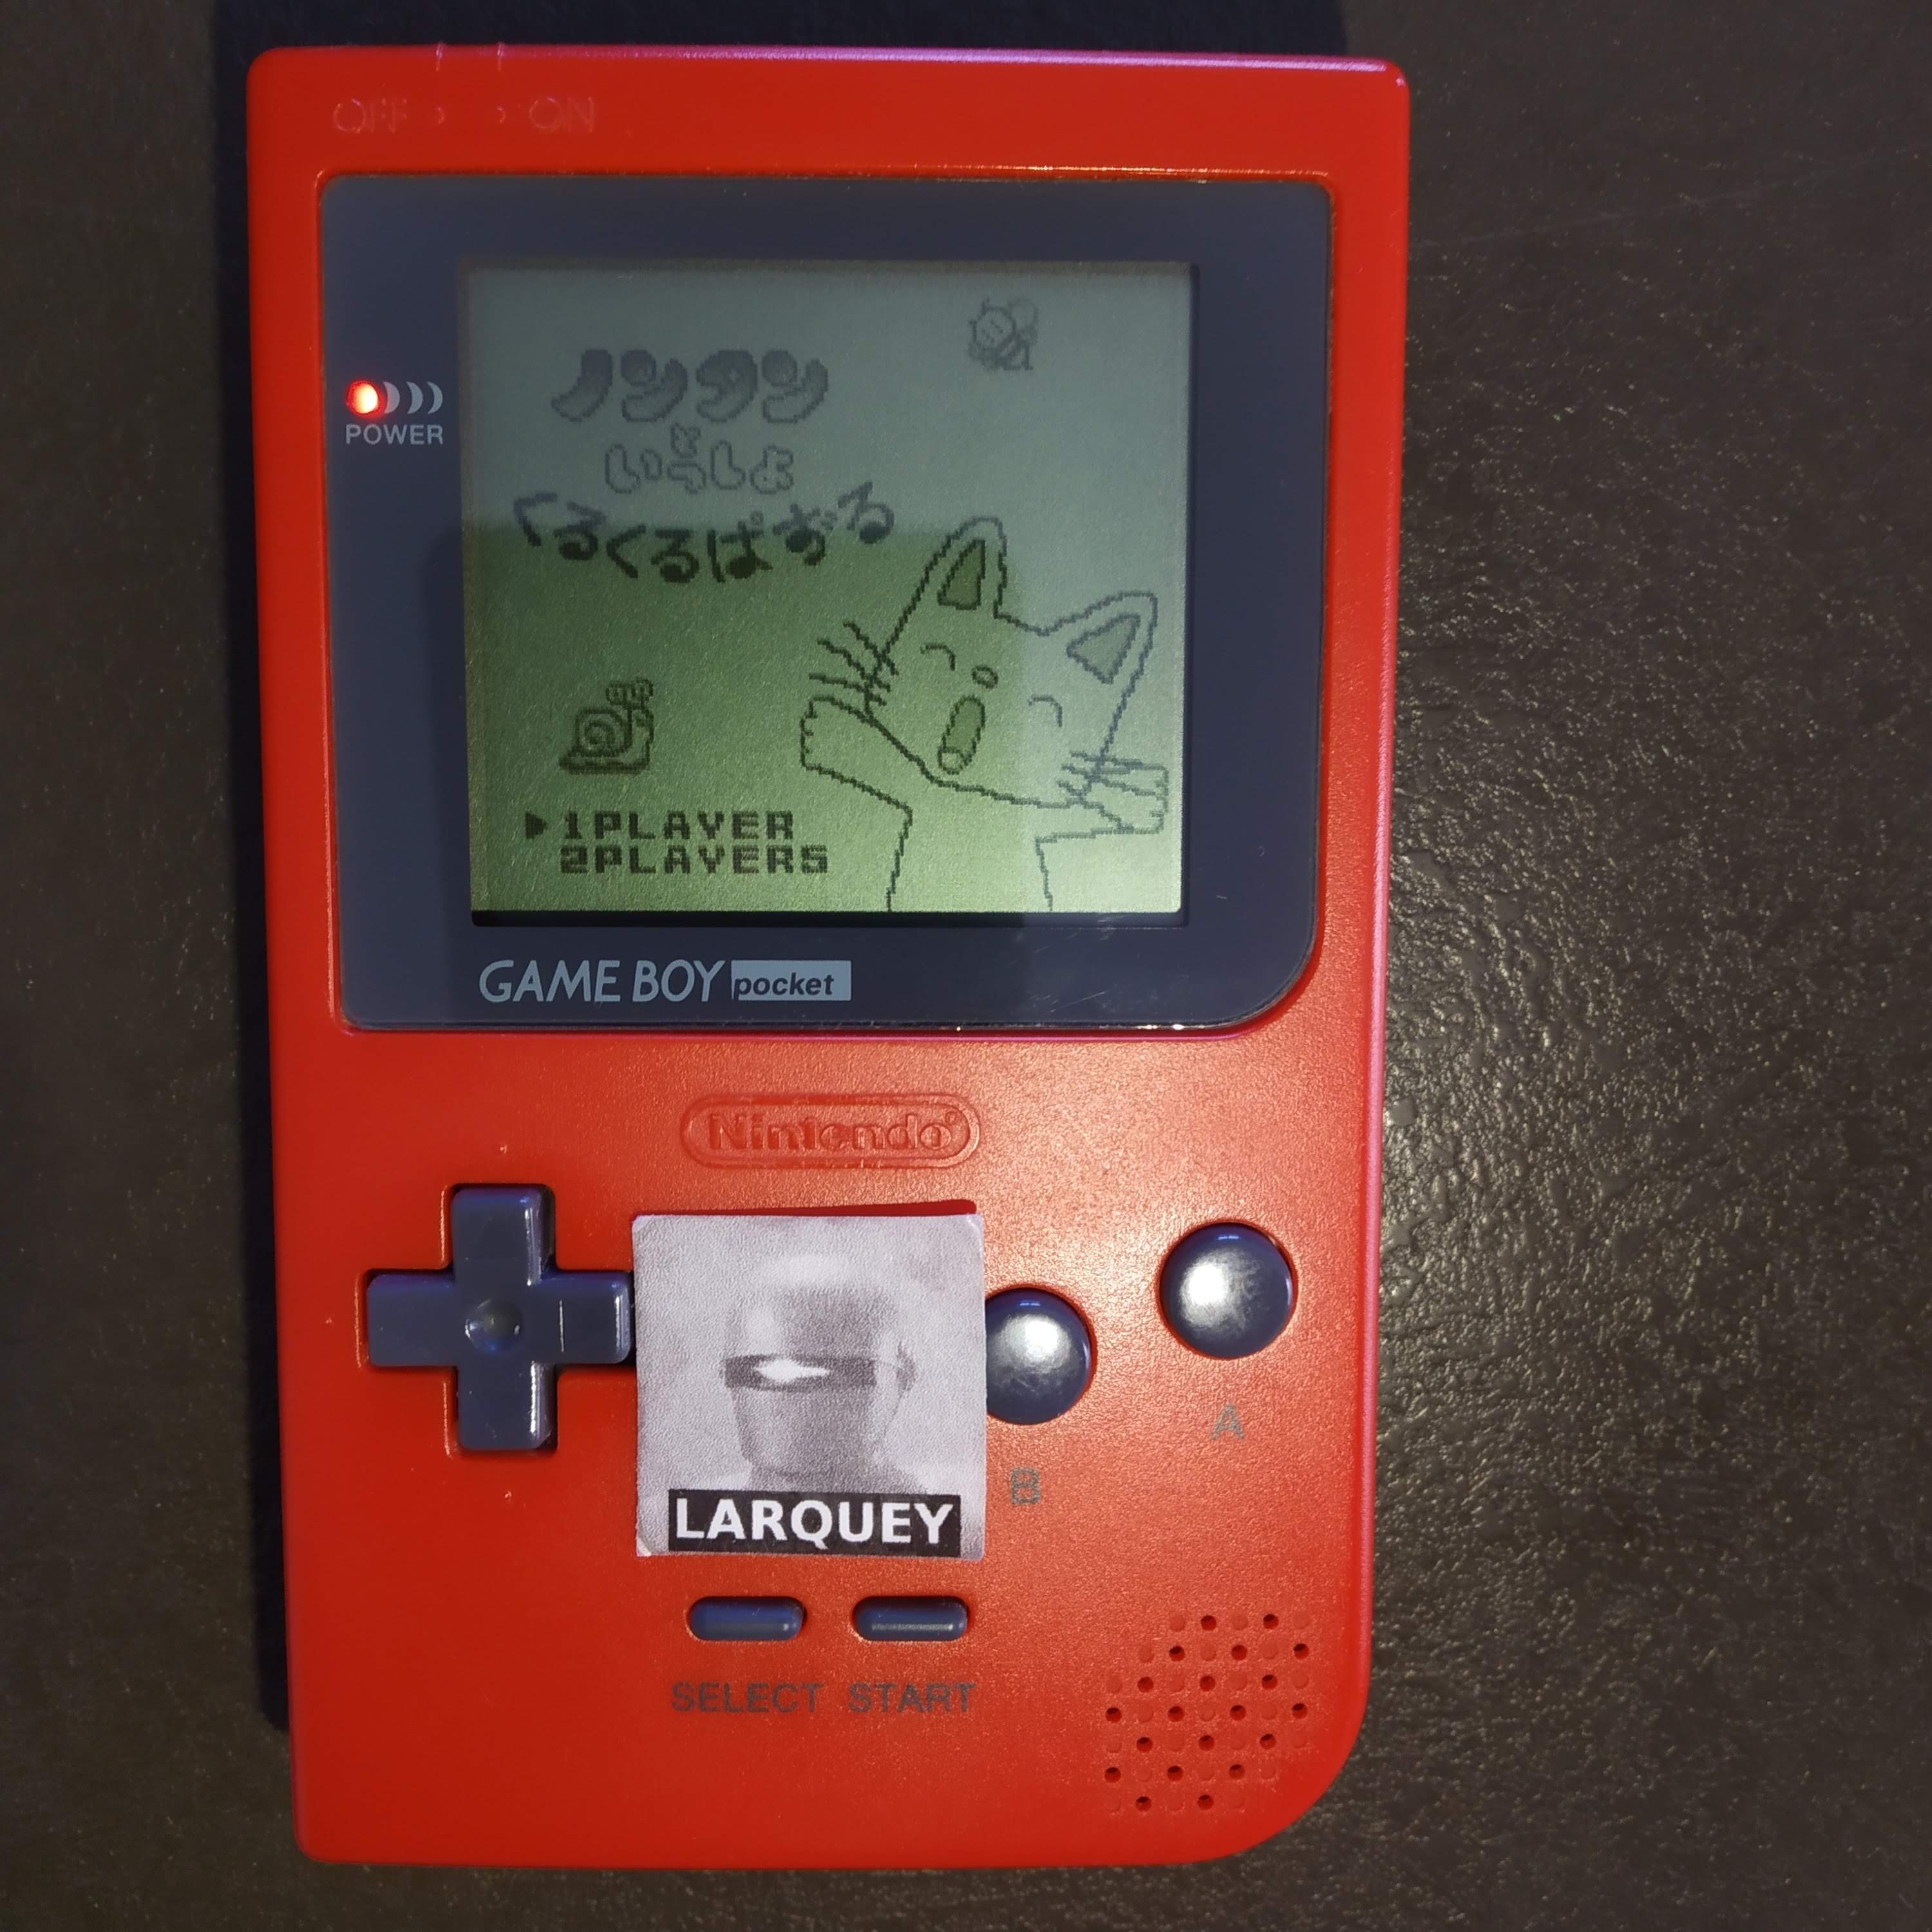 Larquey: Nontan to Issho: Kuru Kuru Puzzle (Game Boy) 770 points on 2020-05-26 09:23:44